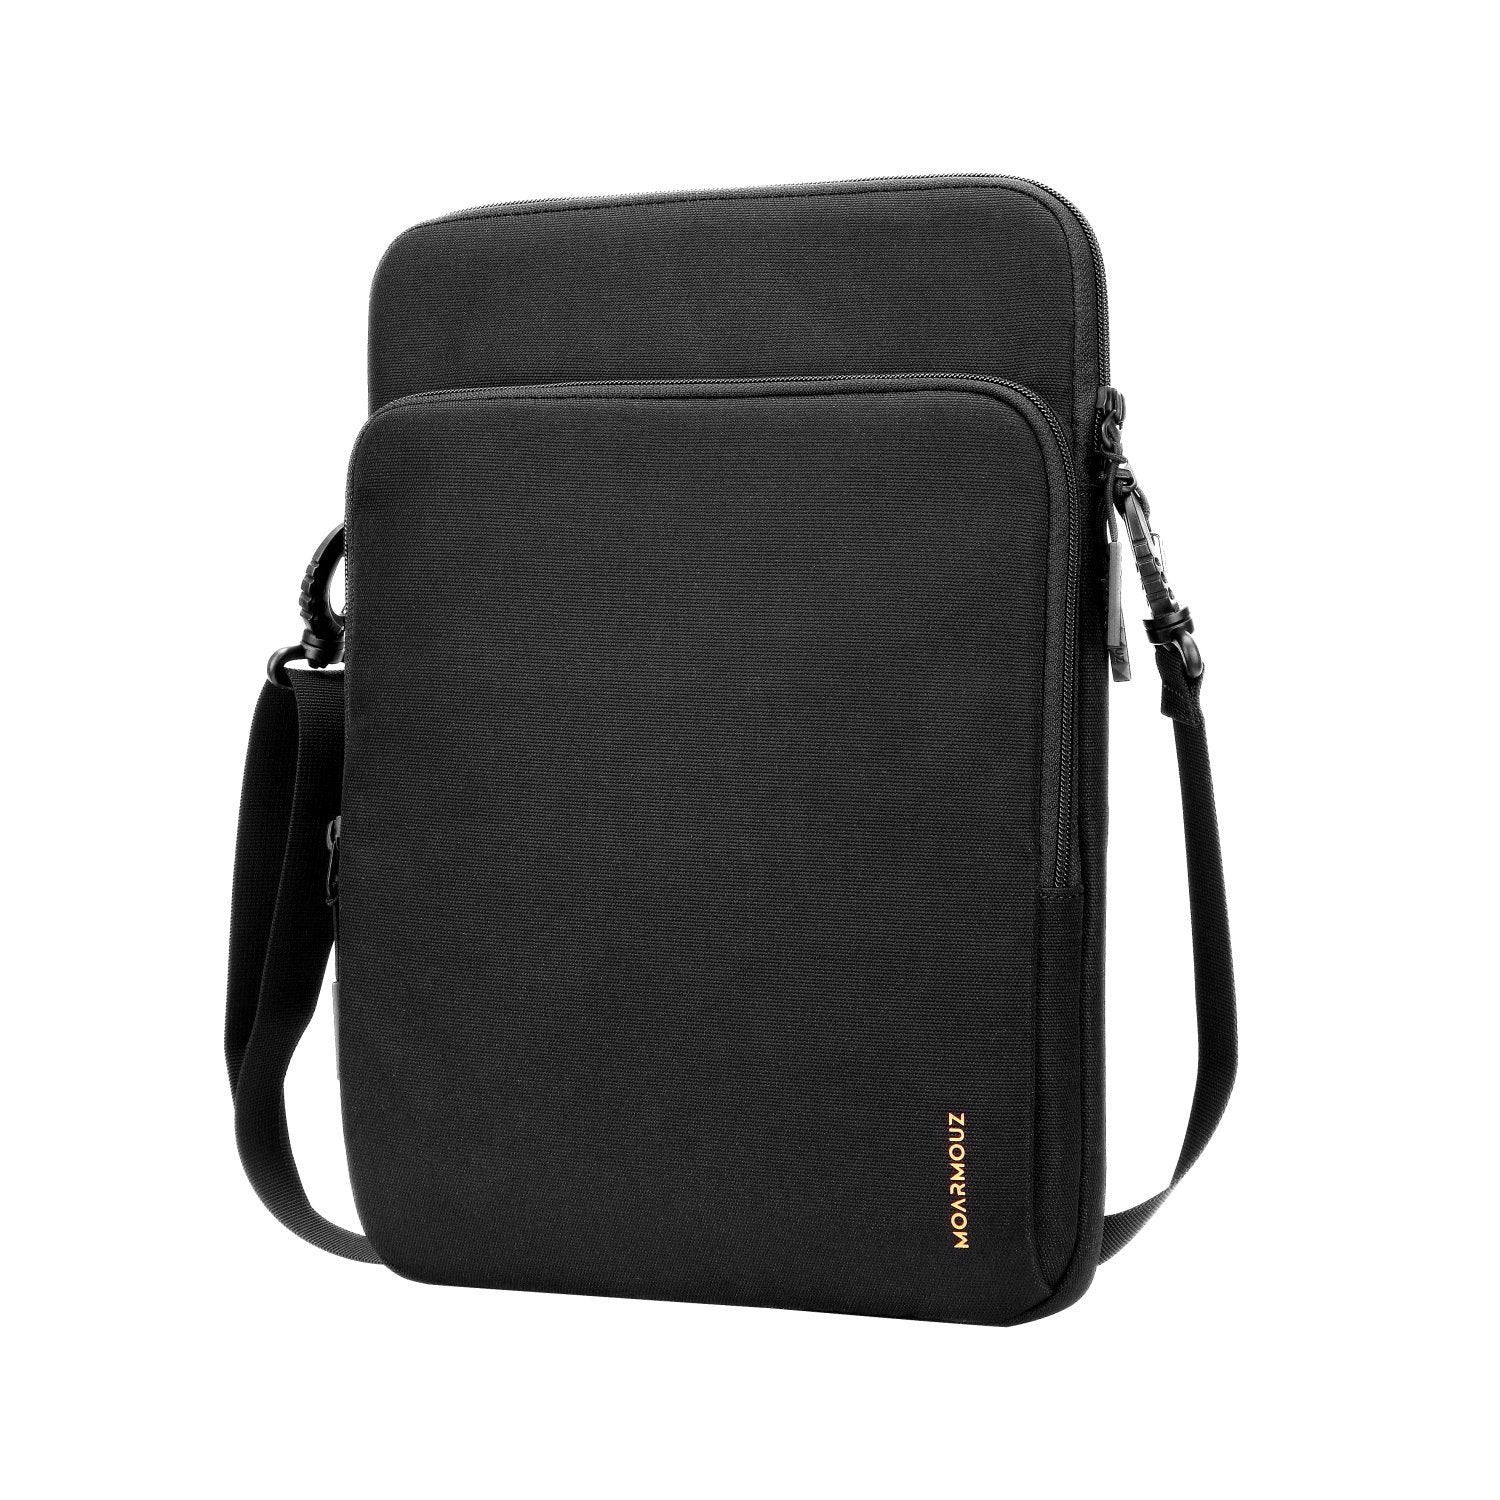 MoArmouz - Water Resistant Shoulder Bag for Tablets and Laptops